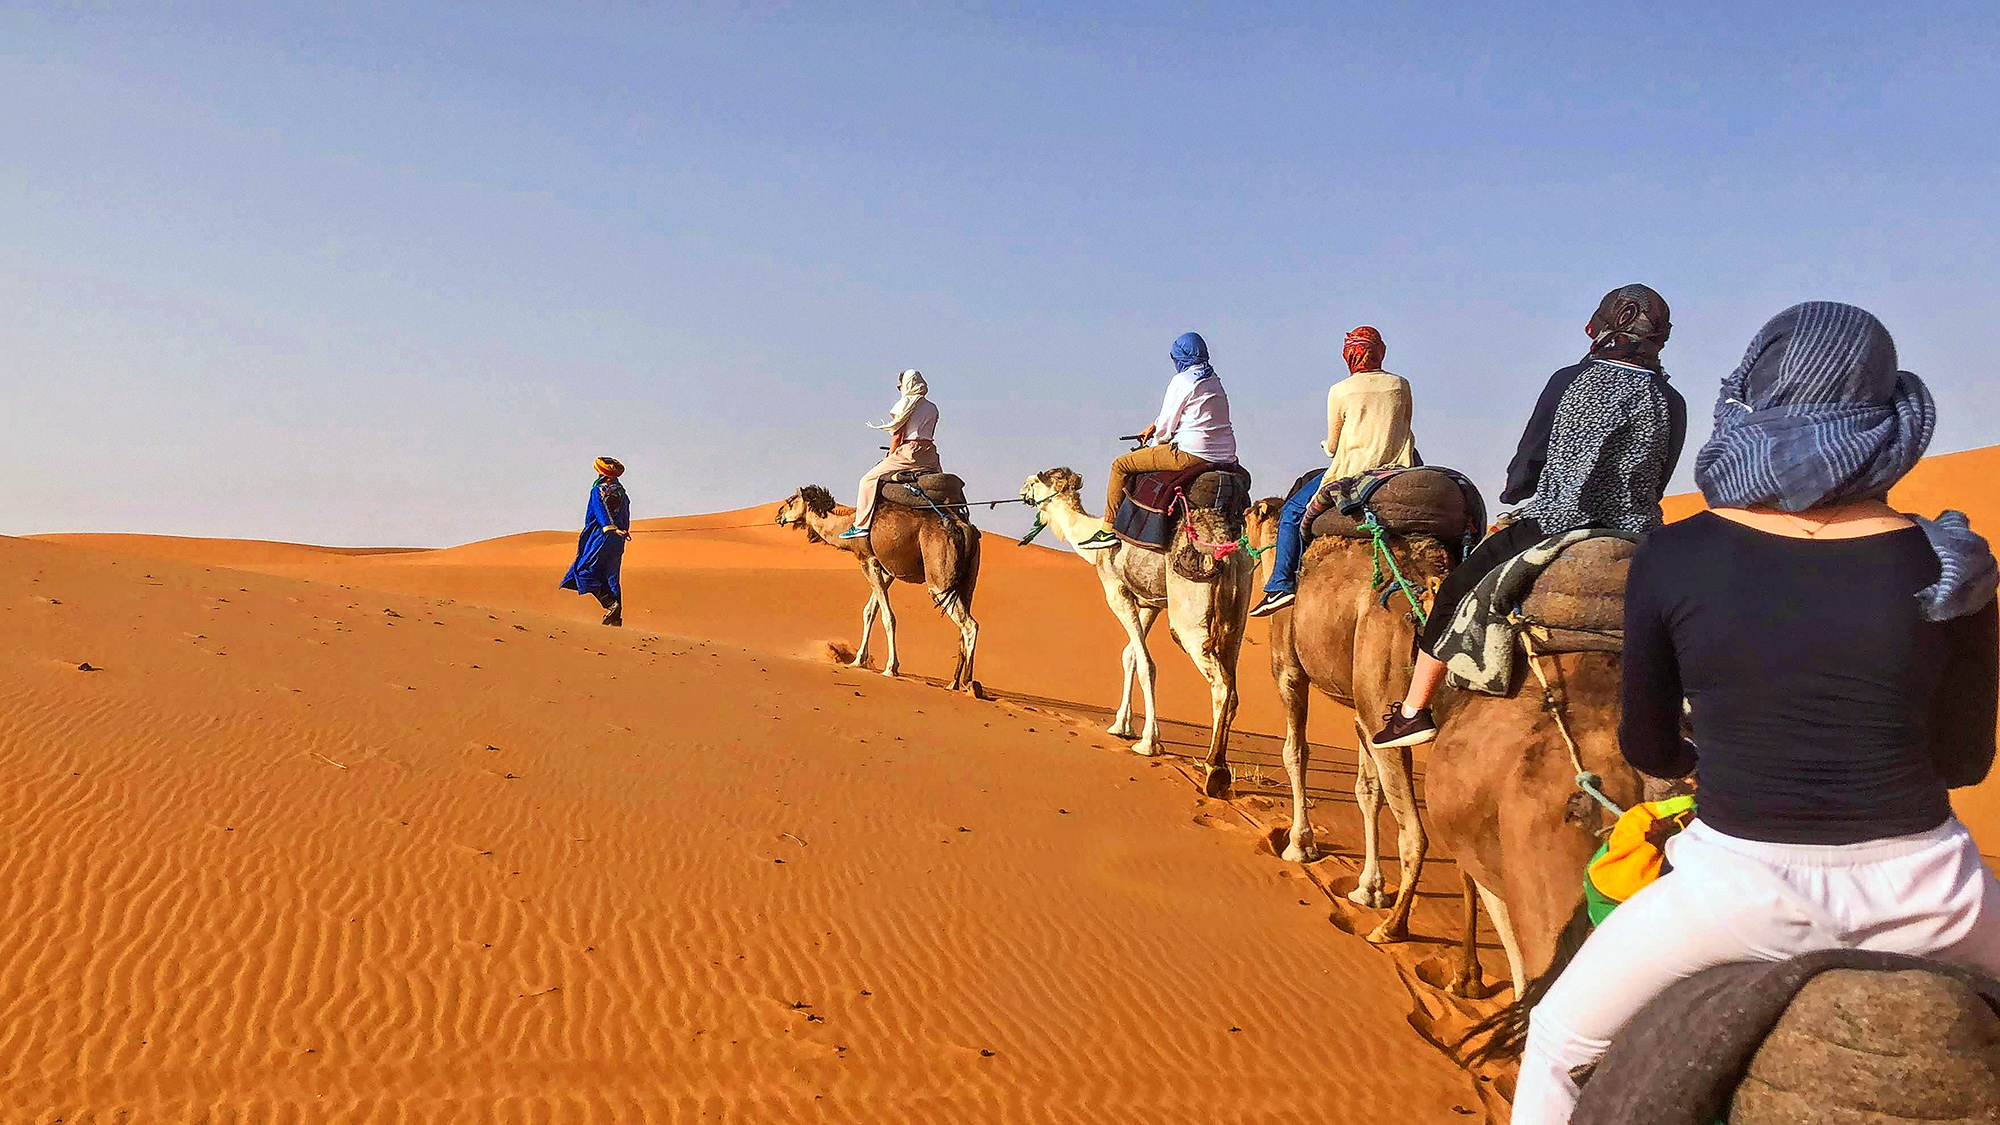 caravan of travelers riding camels in the Moroccan desert